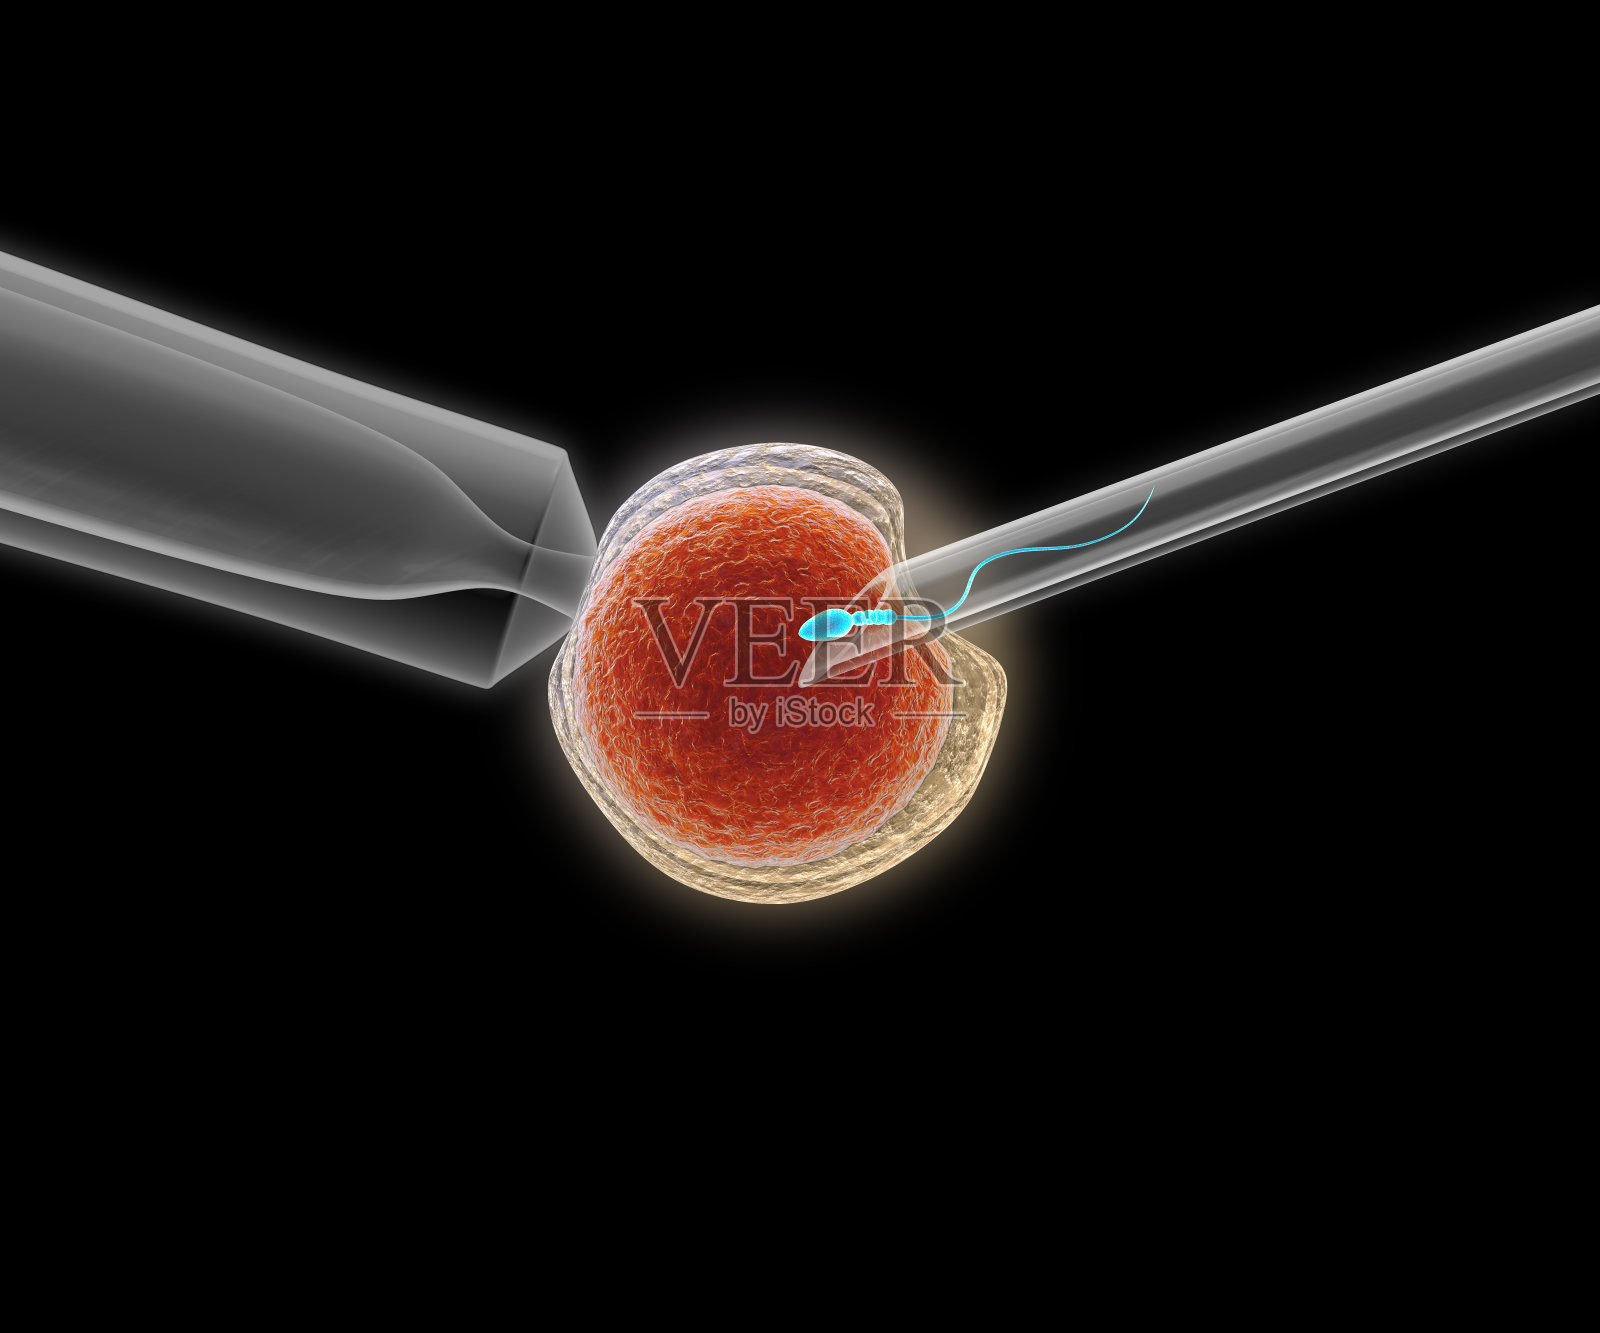 icsi(胞浆内精子注射)过程的3D插图——将单个精子直接注射到卵子中照片摄影图片